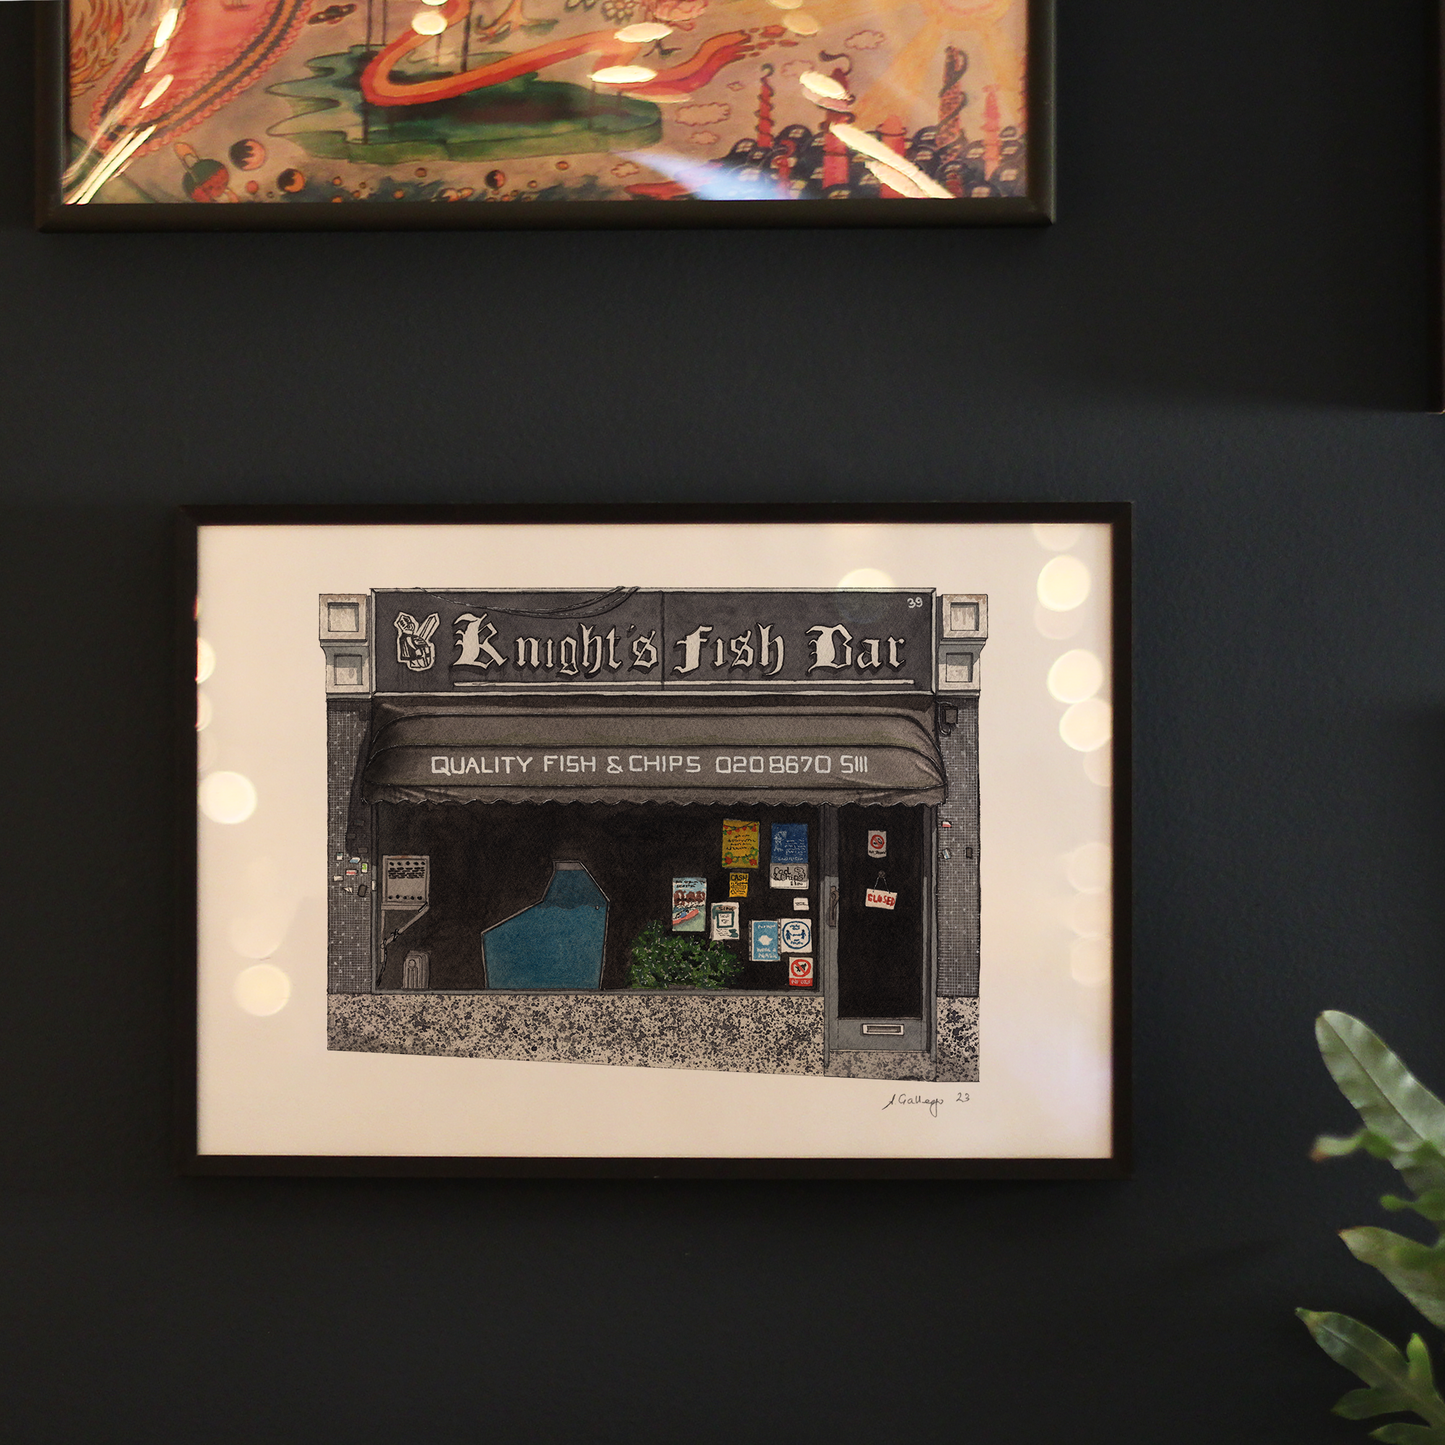 West Norwood - Knight's Fish Bar - Giclée Print (unframed)